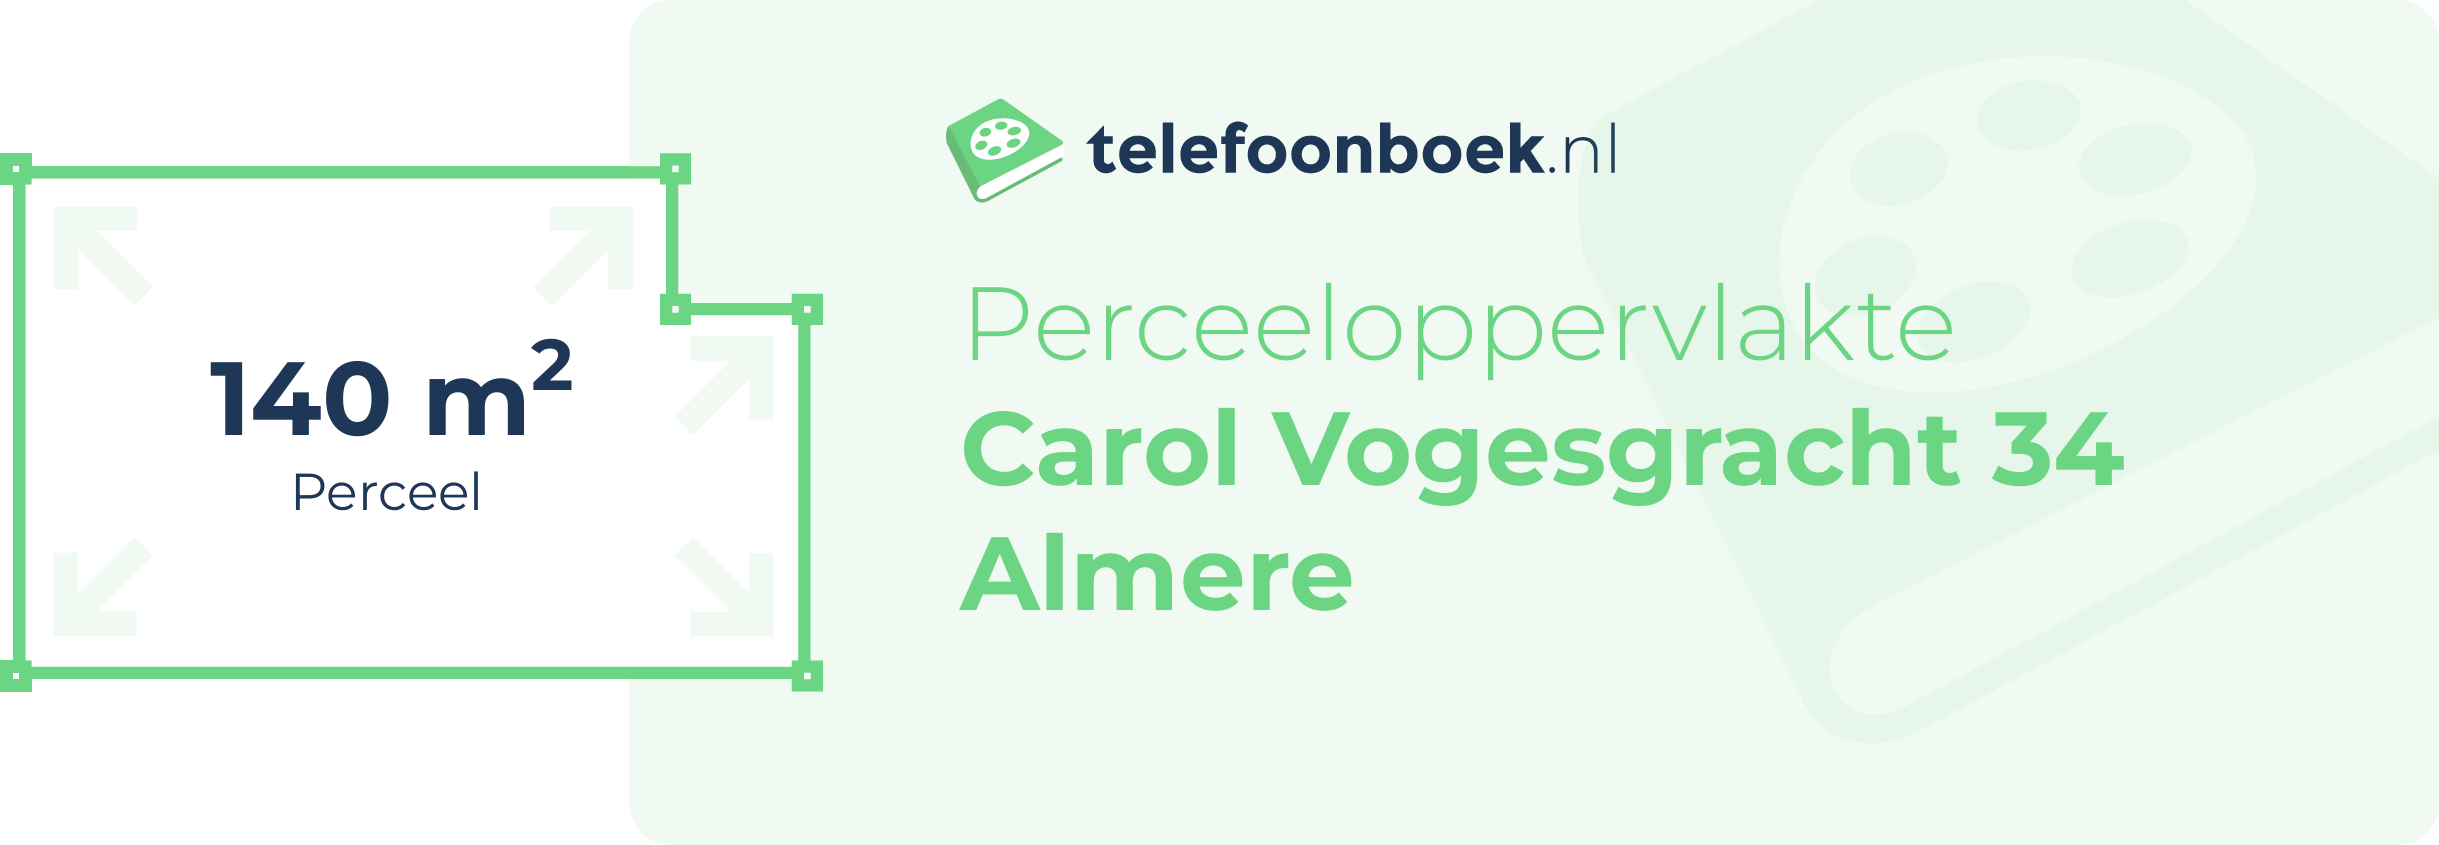 Perceeloppervlakte Carol Vogesgracht 34 Almere